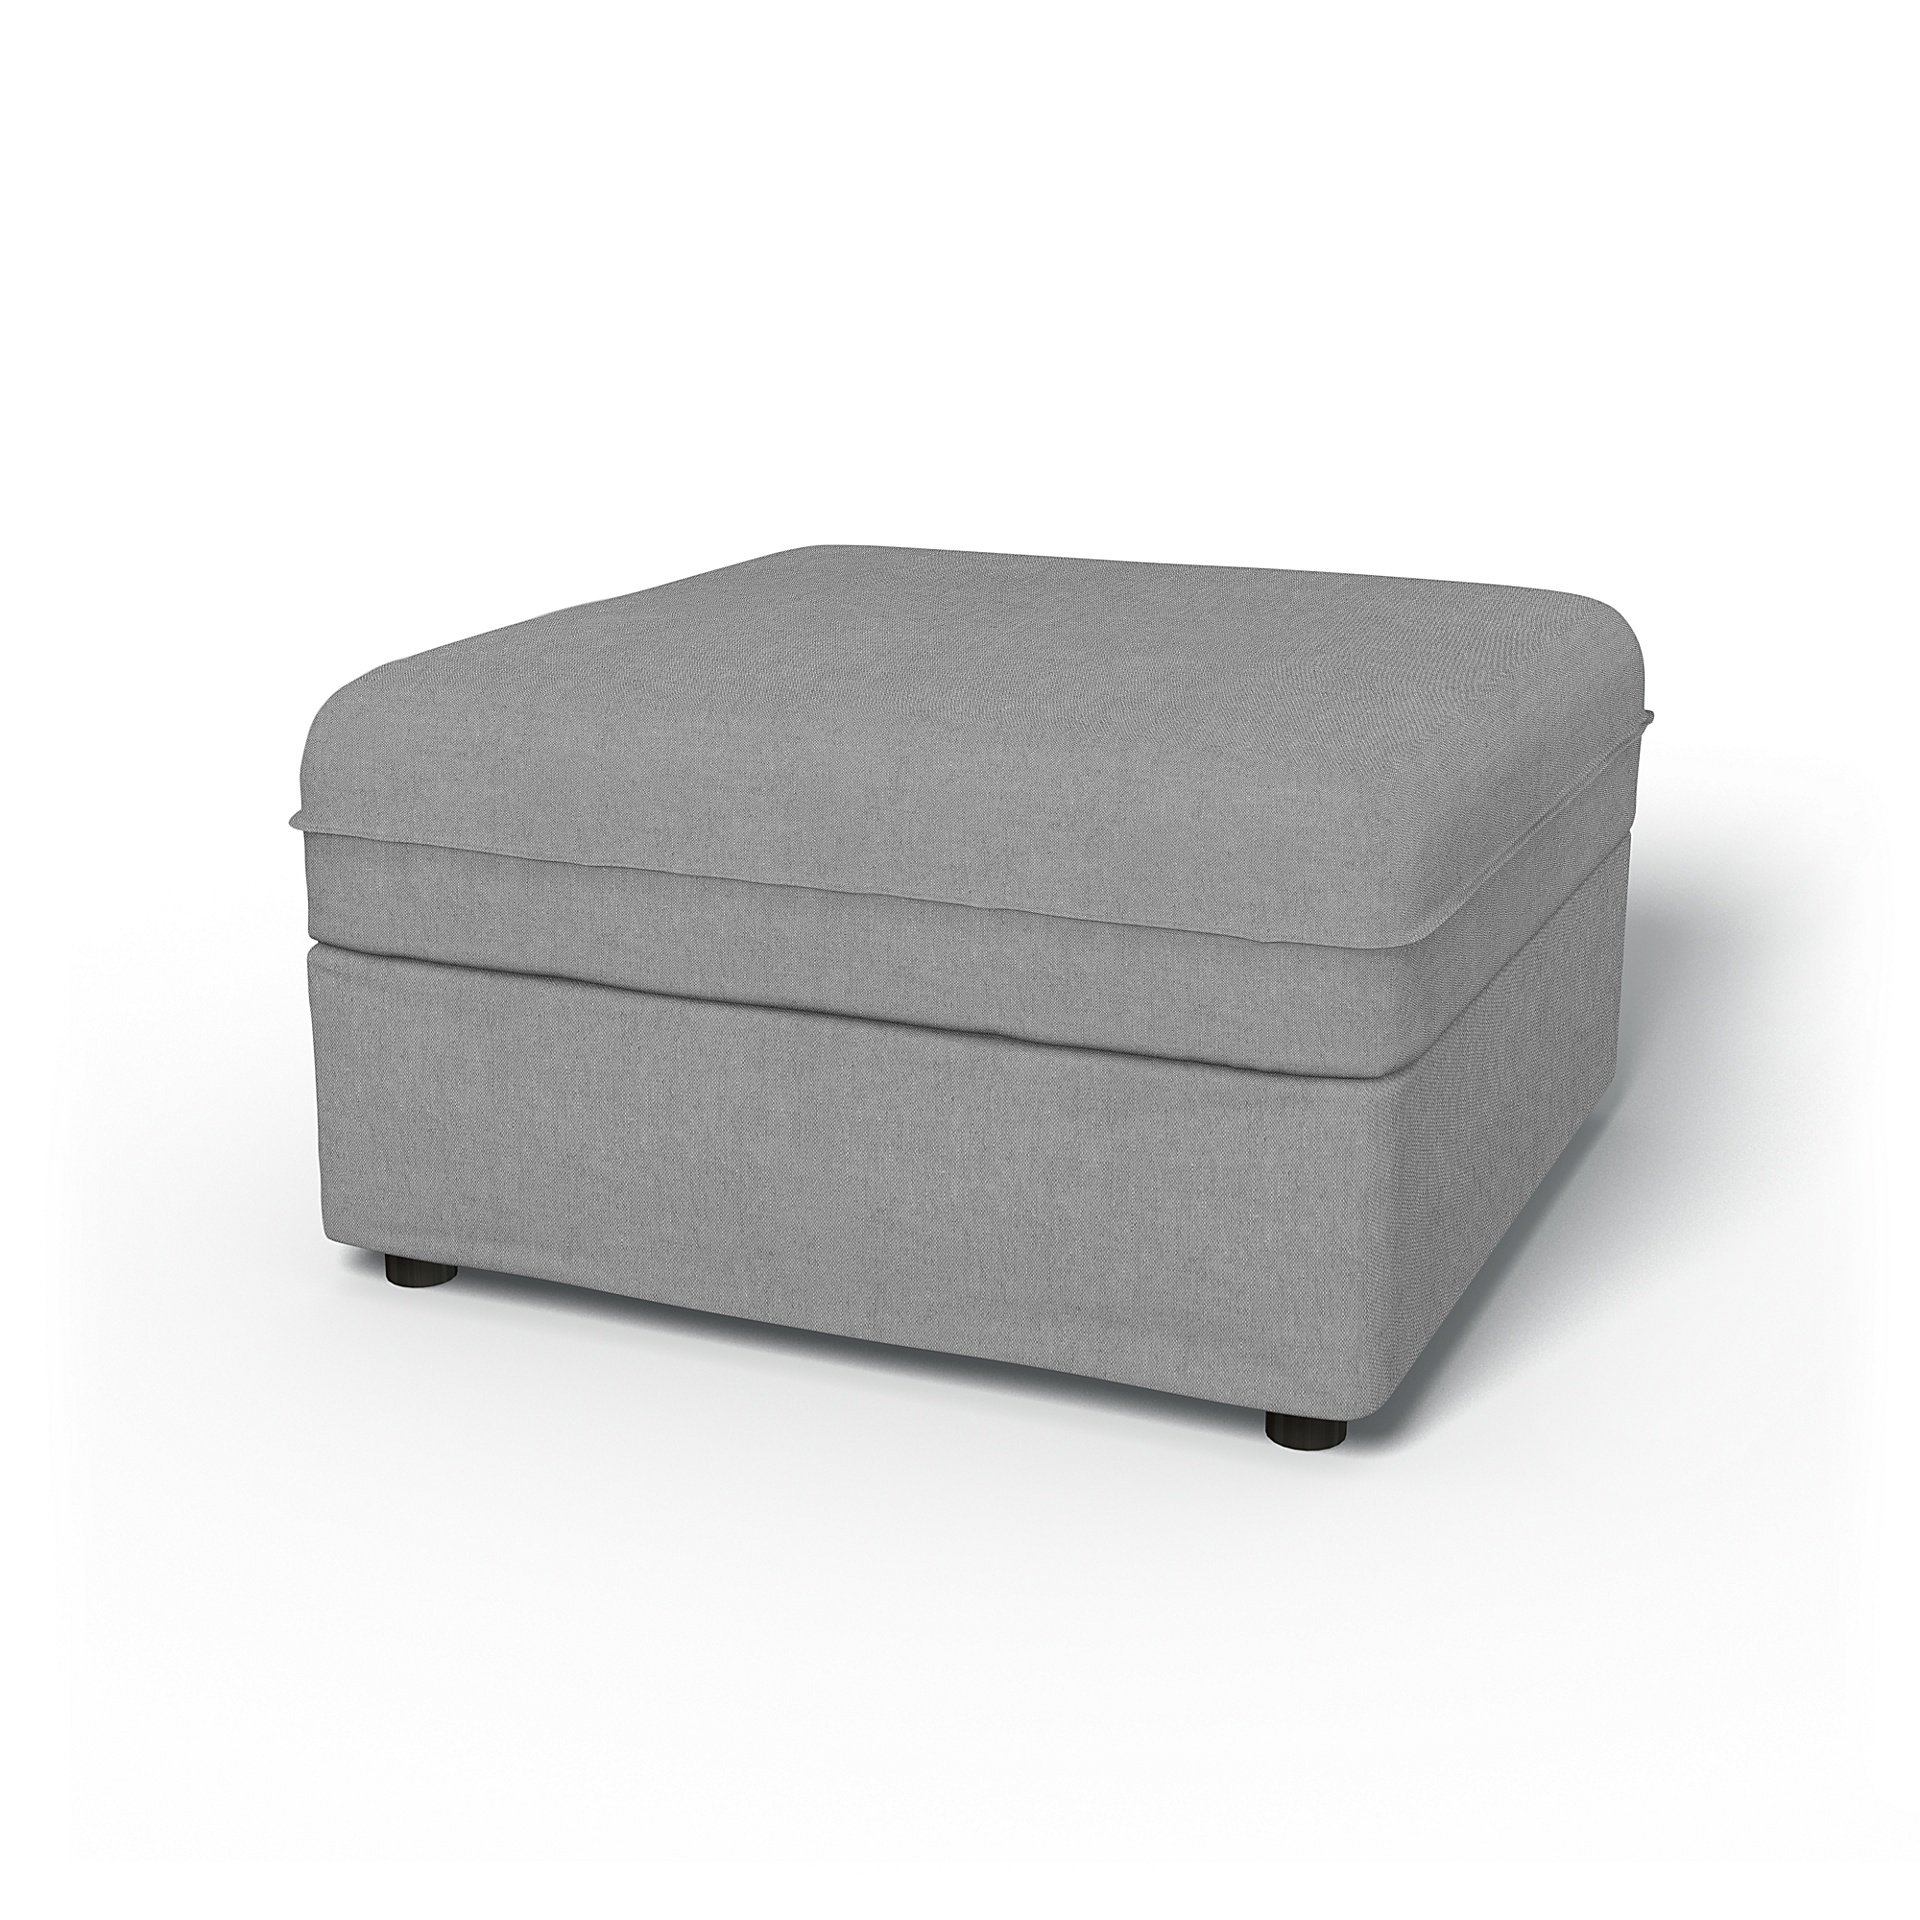 IKEA - Vallentuna Seat Module with Storage Cover 80x80cm 32x32in, Graphite, Linen - Bemz